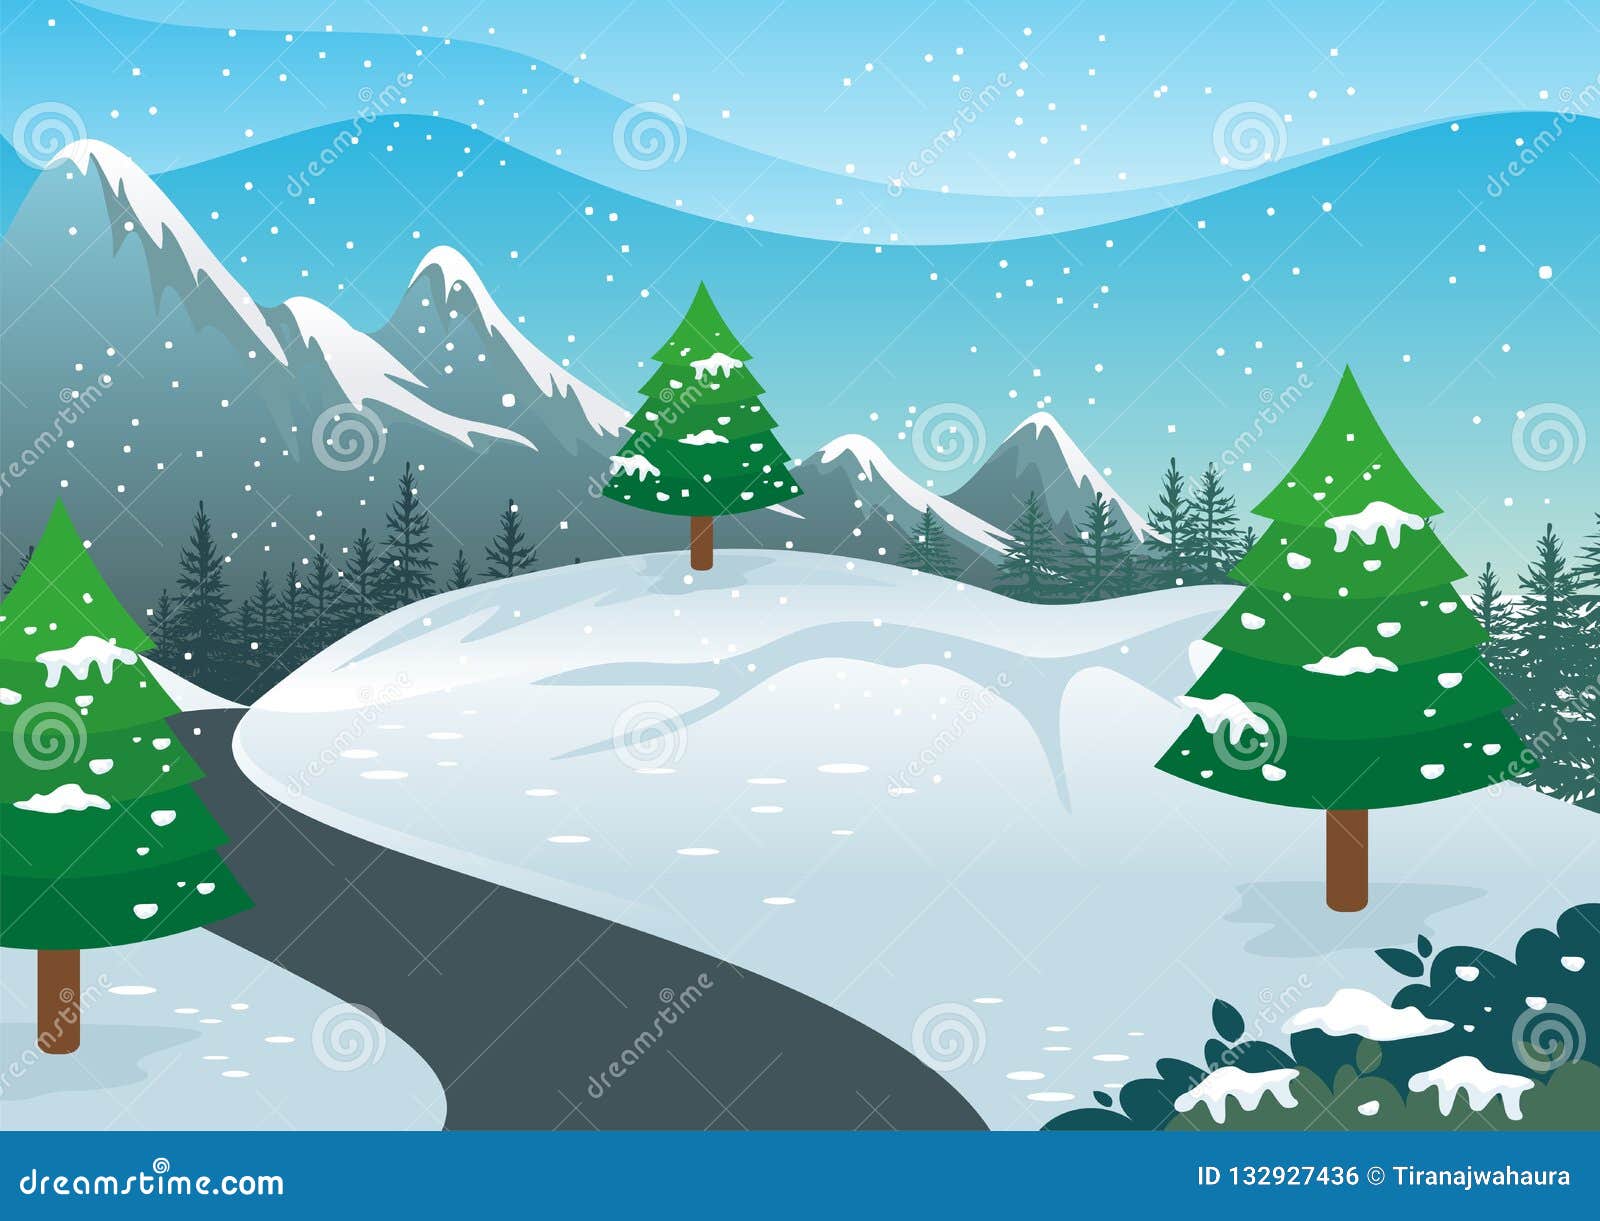 Winter Landscape with Lovely Cartoon Design Stock Vector - Illustration